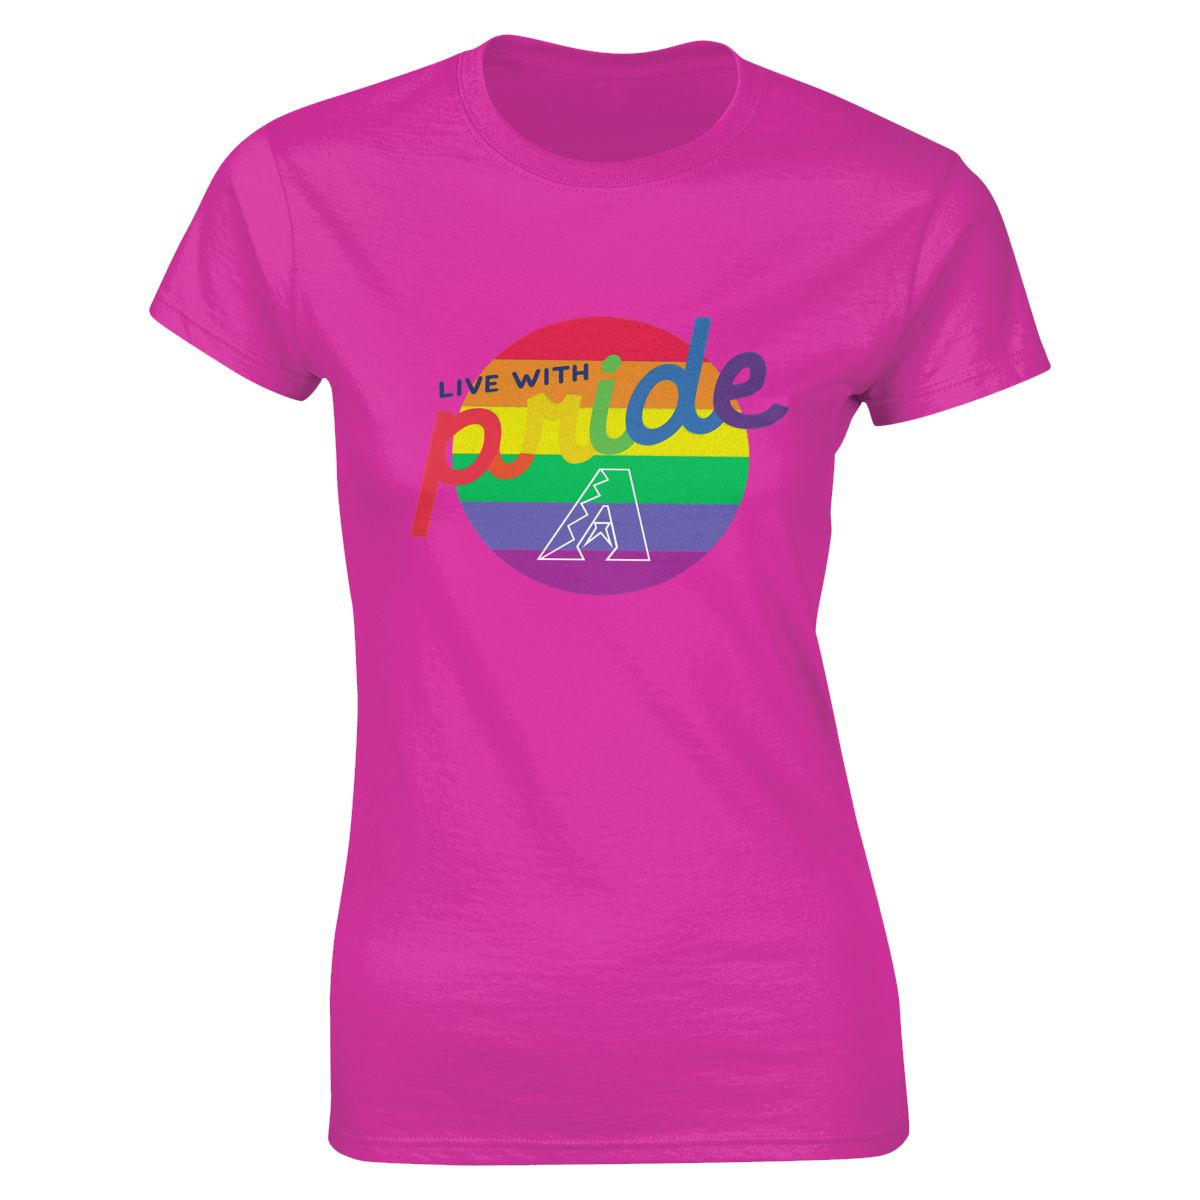 Arizona Diamondbacks Round LGBT Lettering Women's Classic-Fit T-Shirt